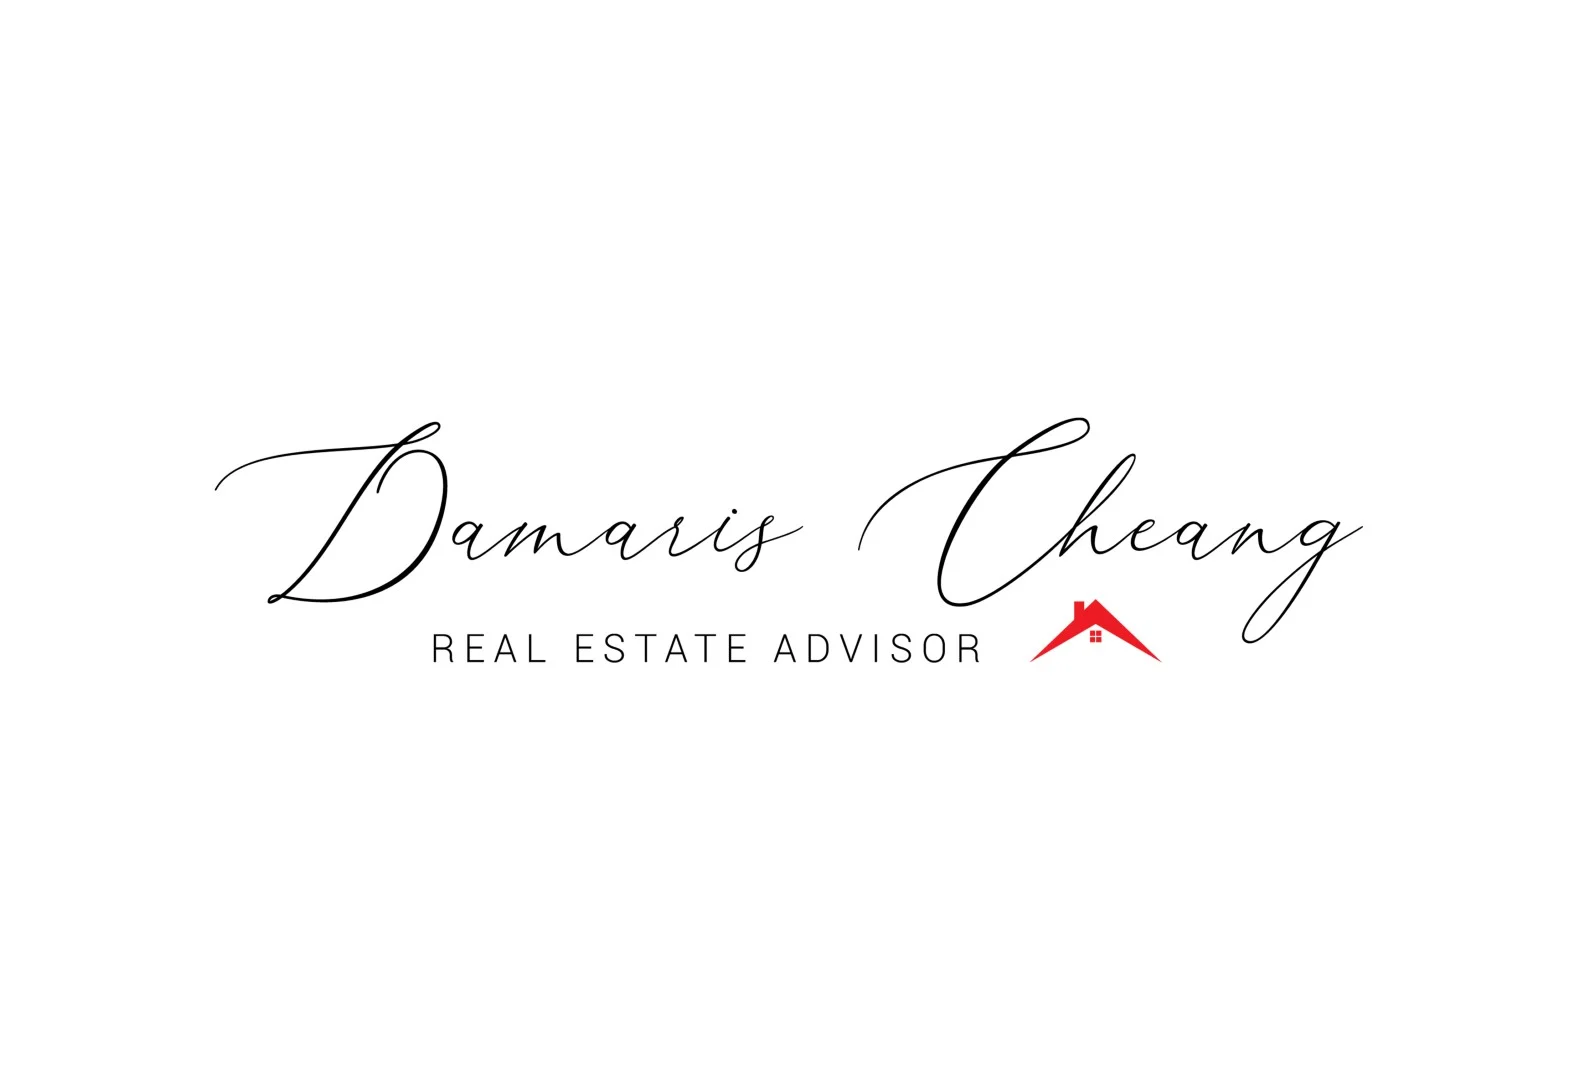 Damaris Cheang Logo